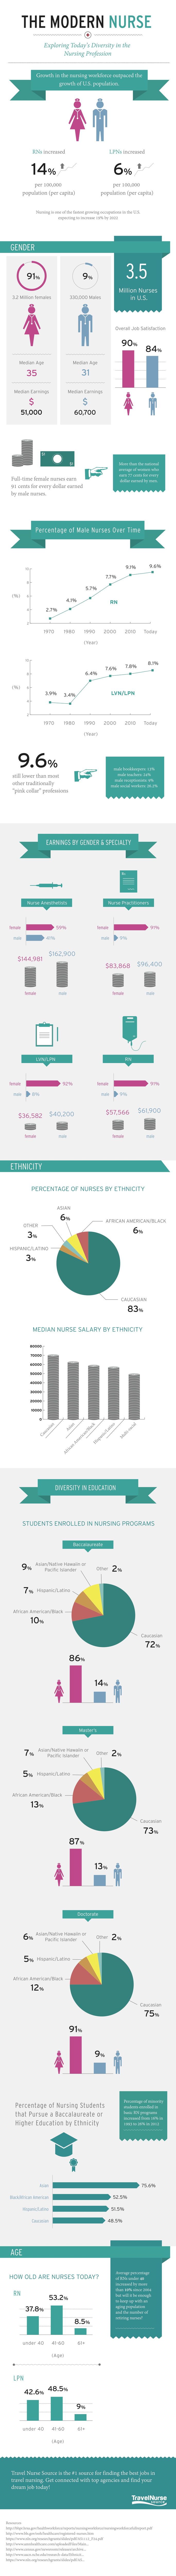 The Modern Nurse: Exploring Today’s Diversity in the Nursing Profession